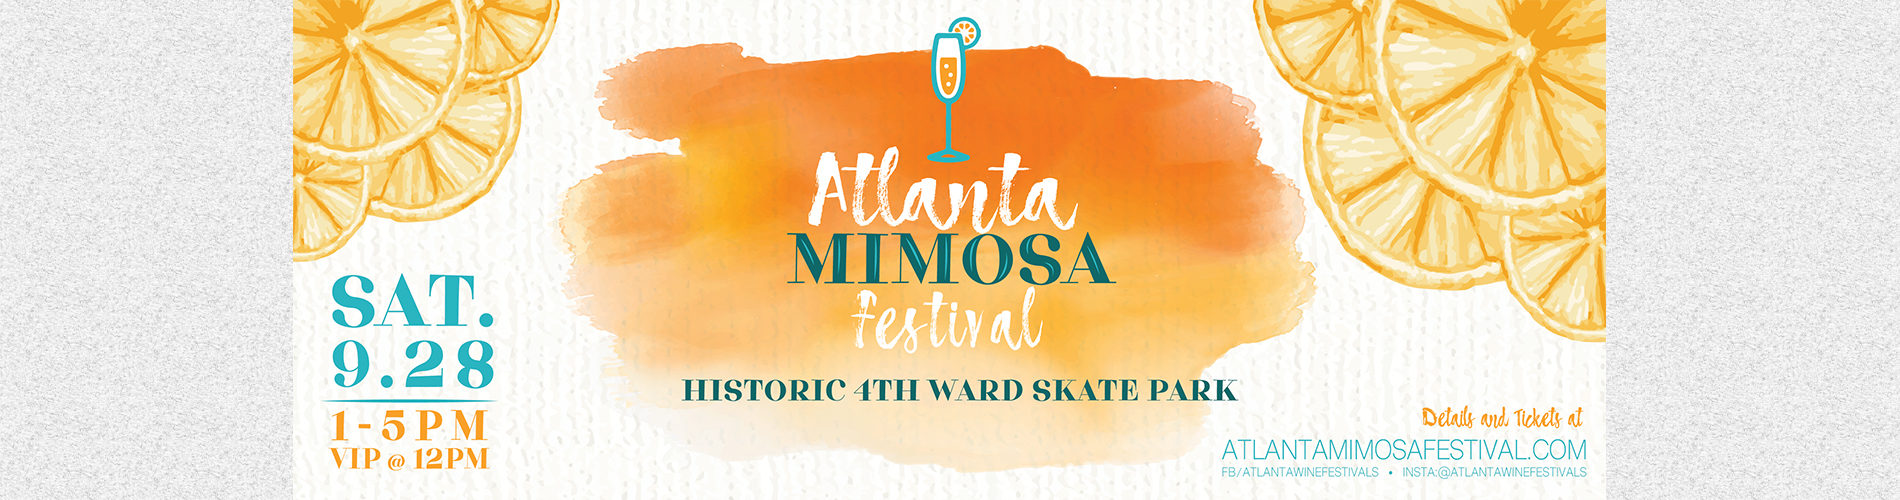 Mimosa Festival Atlanta Wine Festivals